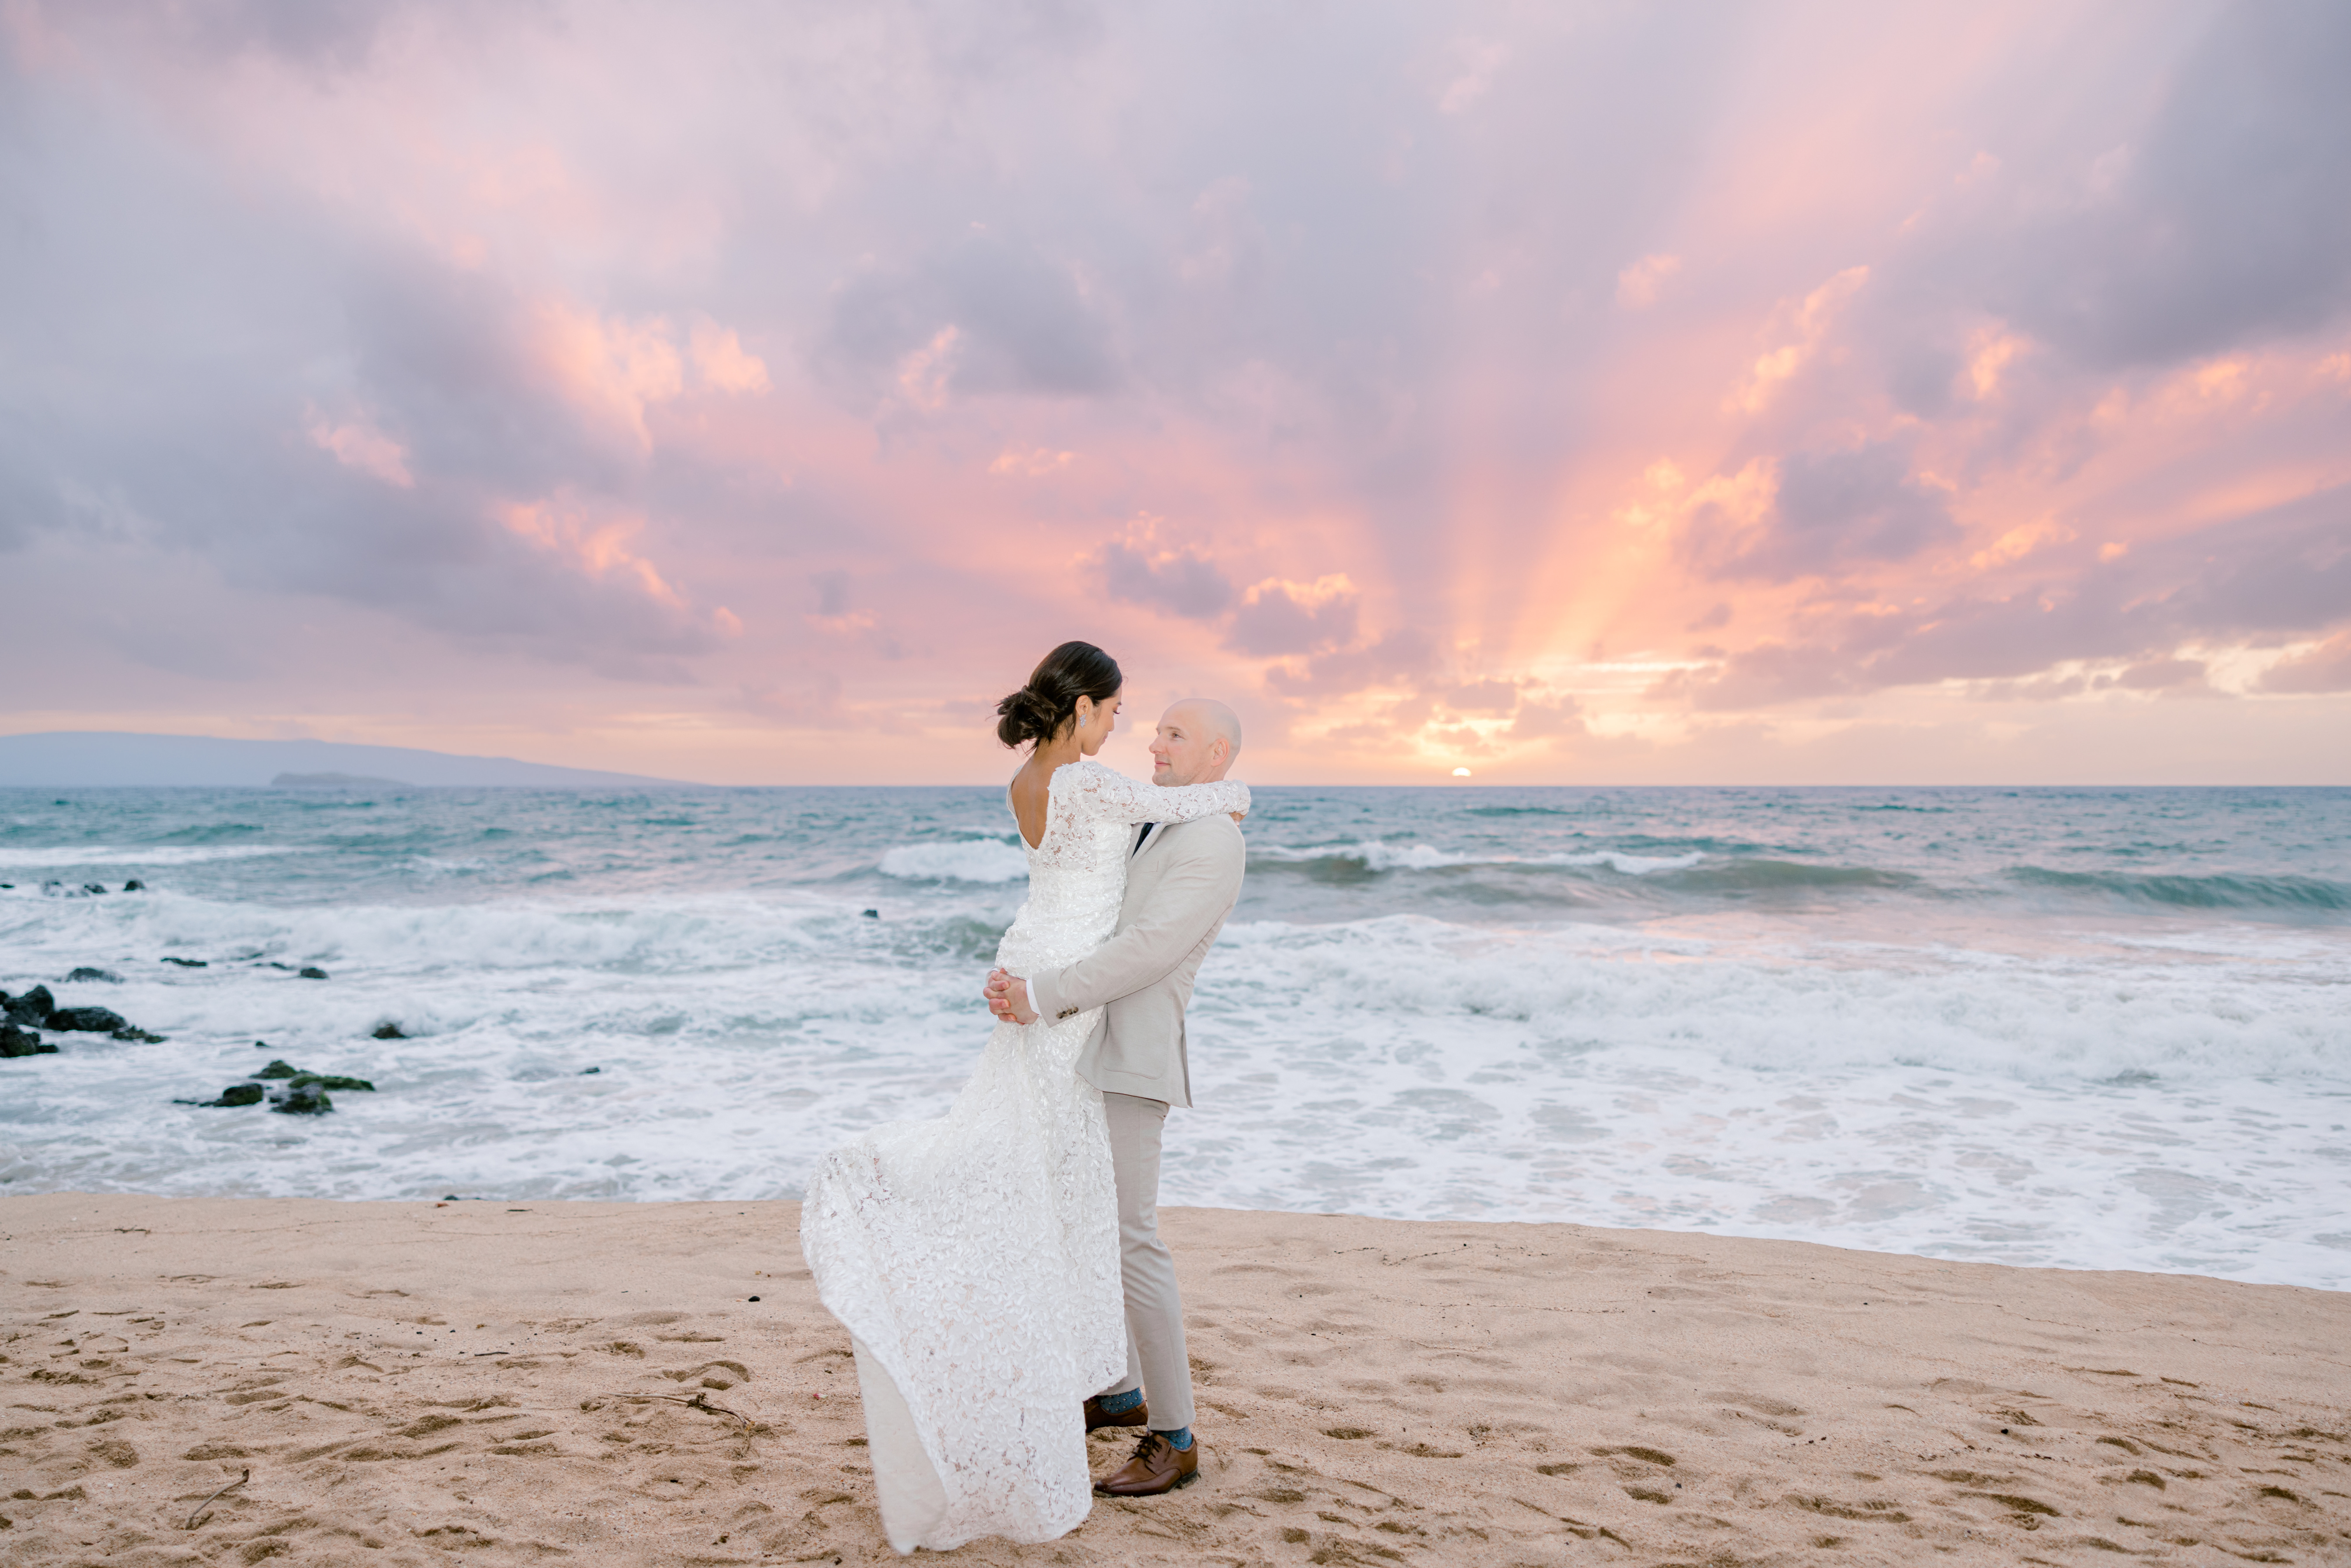 Groom lifting bride while at White Rock Beach in Maui, HI.